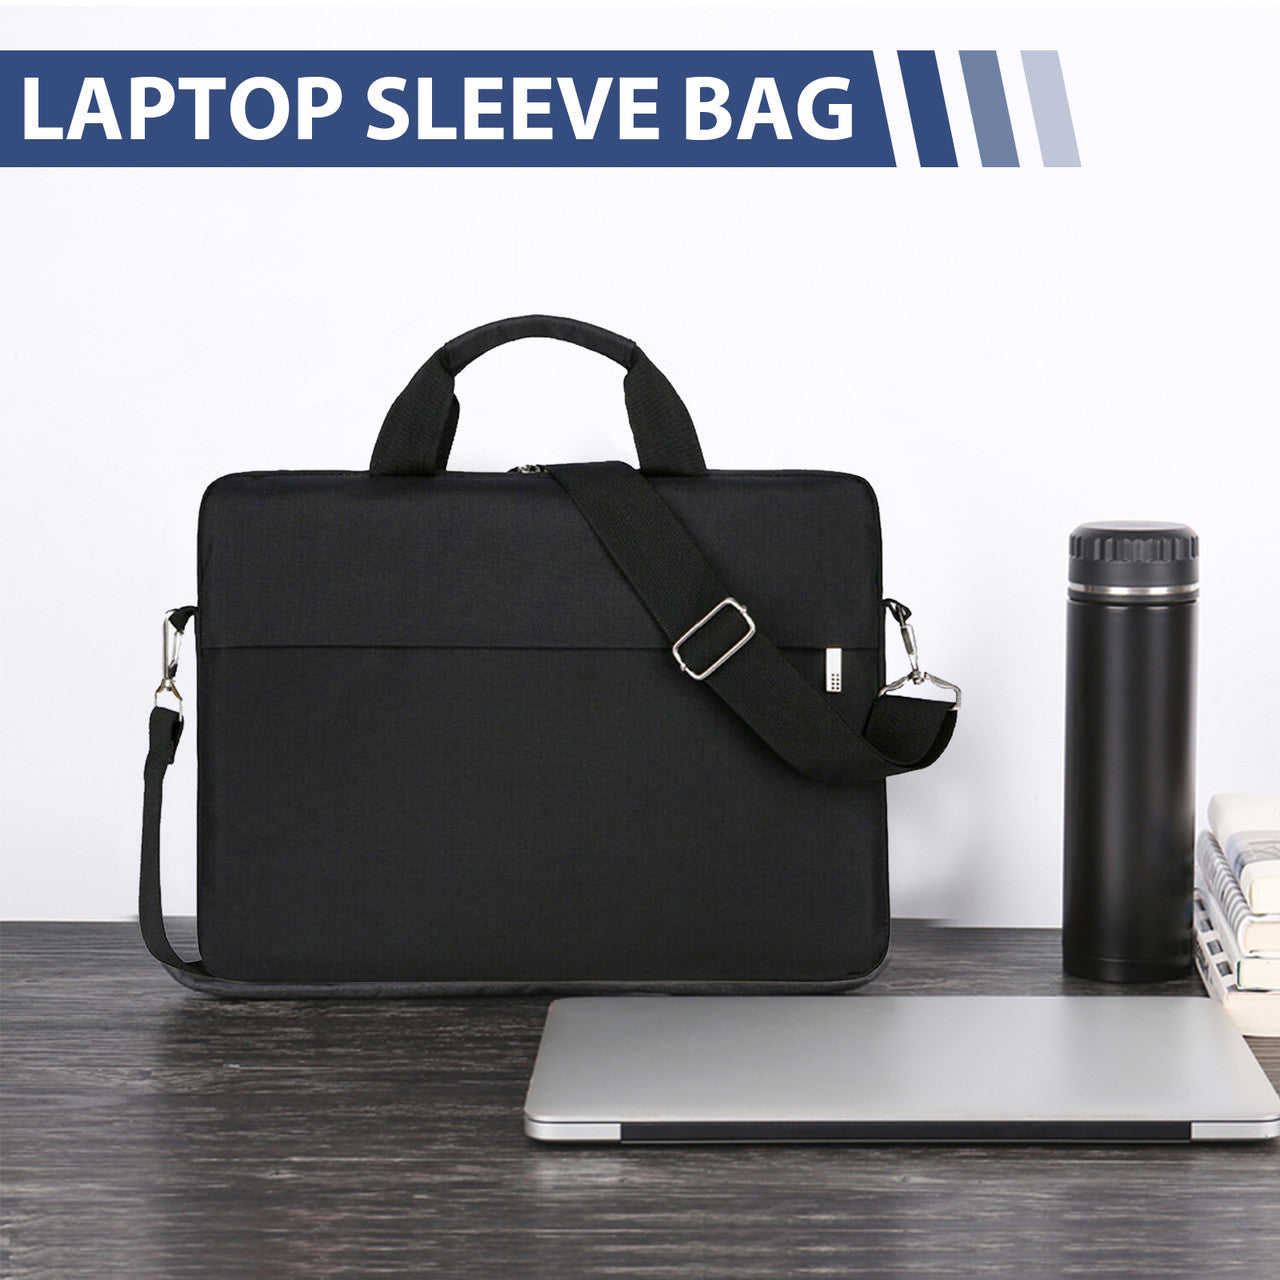 Laptop Sleeve Case Cover, Protective Laptop Shoulder Bag fits for 13/14/15.6Inch Acer Aspire 3/5/7 Laptop, HP Pavilion, ASUS ROG Zephyrus, MacBook Air/Pro & Dell Toshiba Lenovo Samsung Notebook